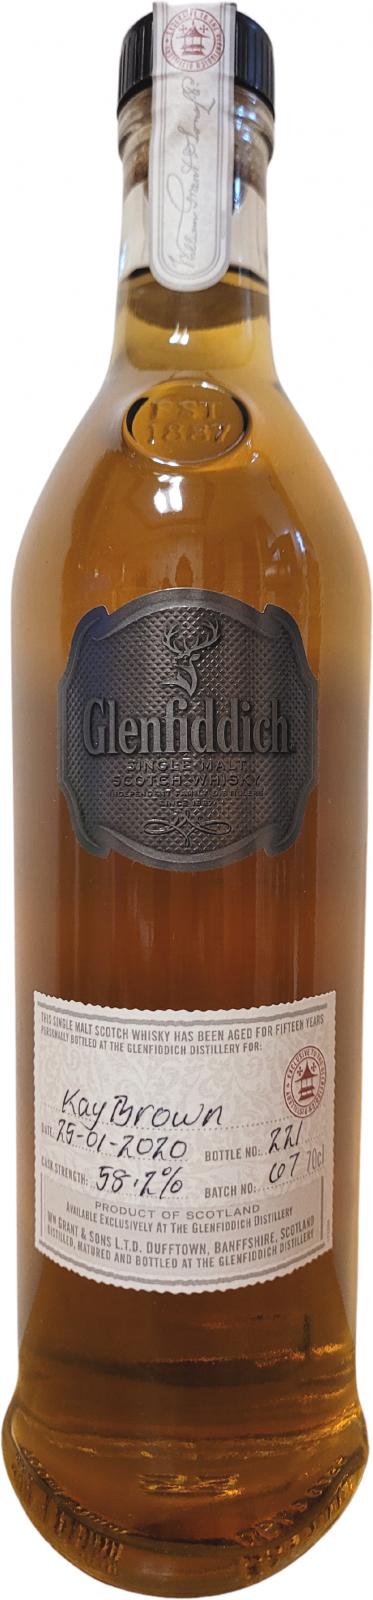 Glenfiddich 15yo CS Handbottled at Visitor Center Batch #67 58.2% 700ml